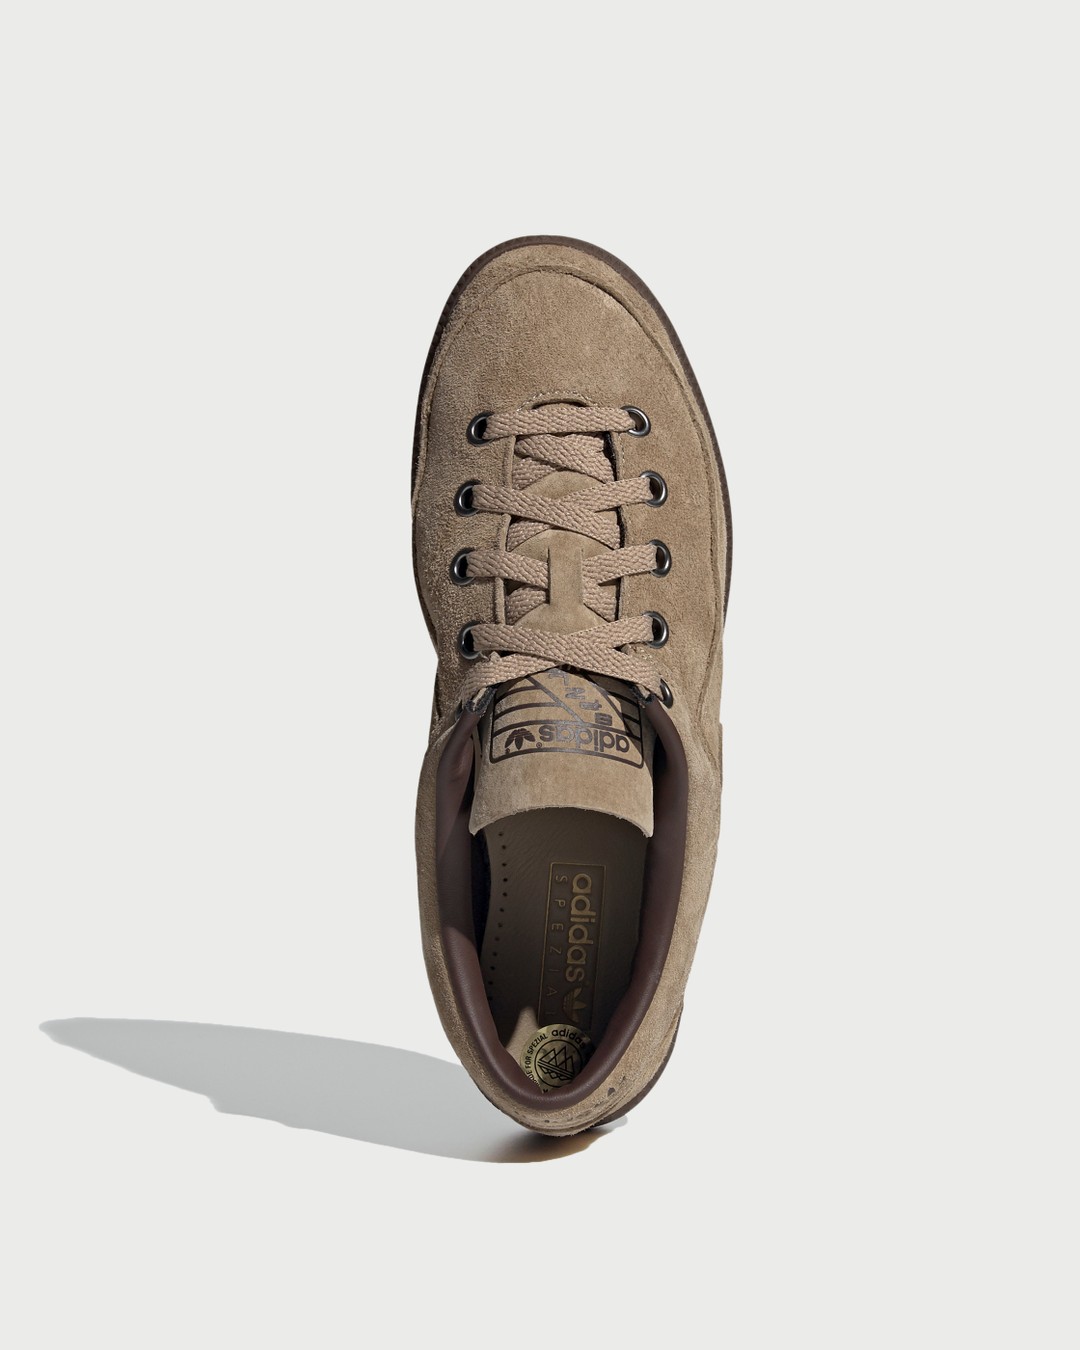 Adidas – Newrad Spezial Brown - Sneakers - Brown - Image 3